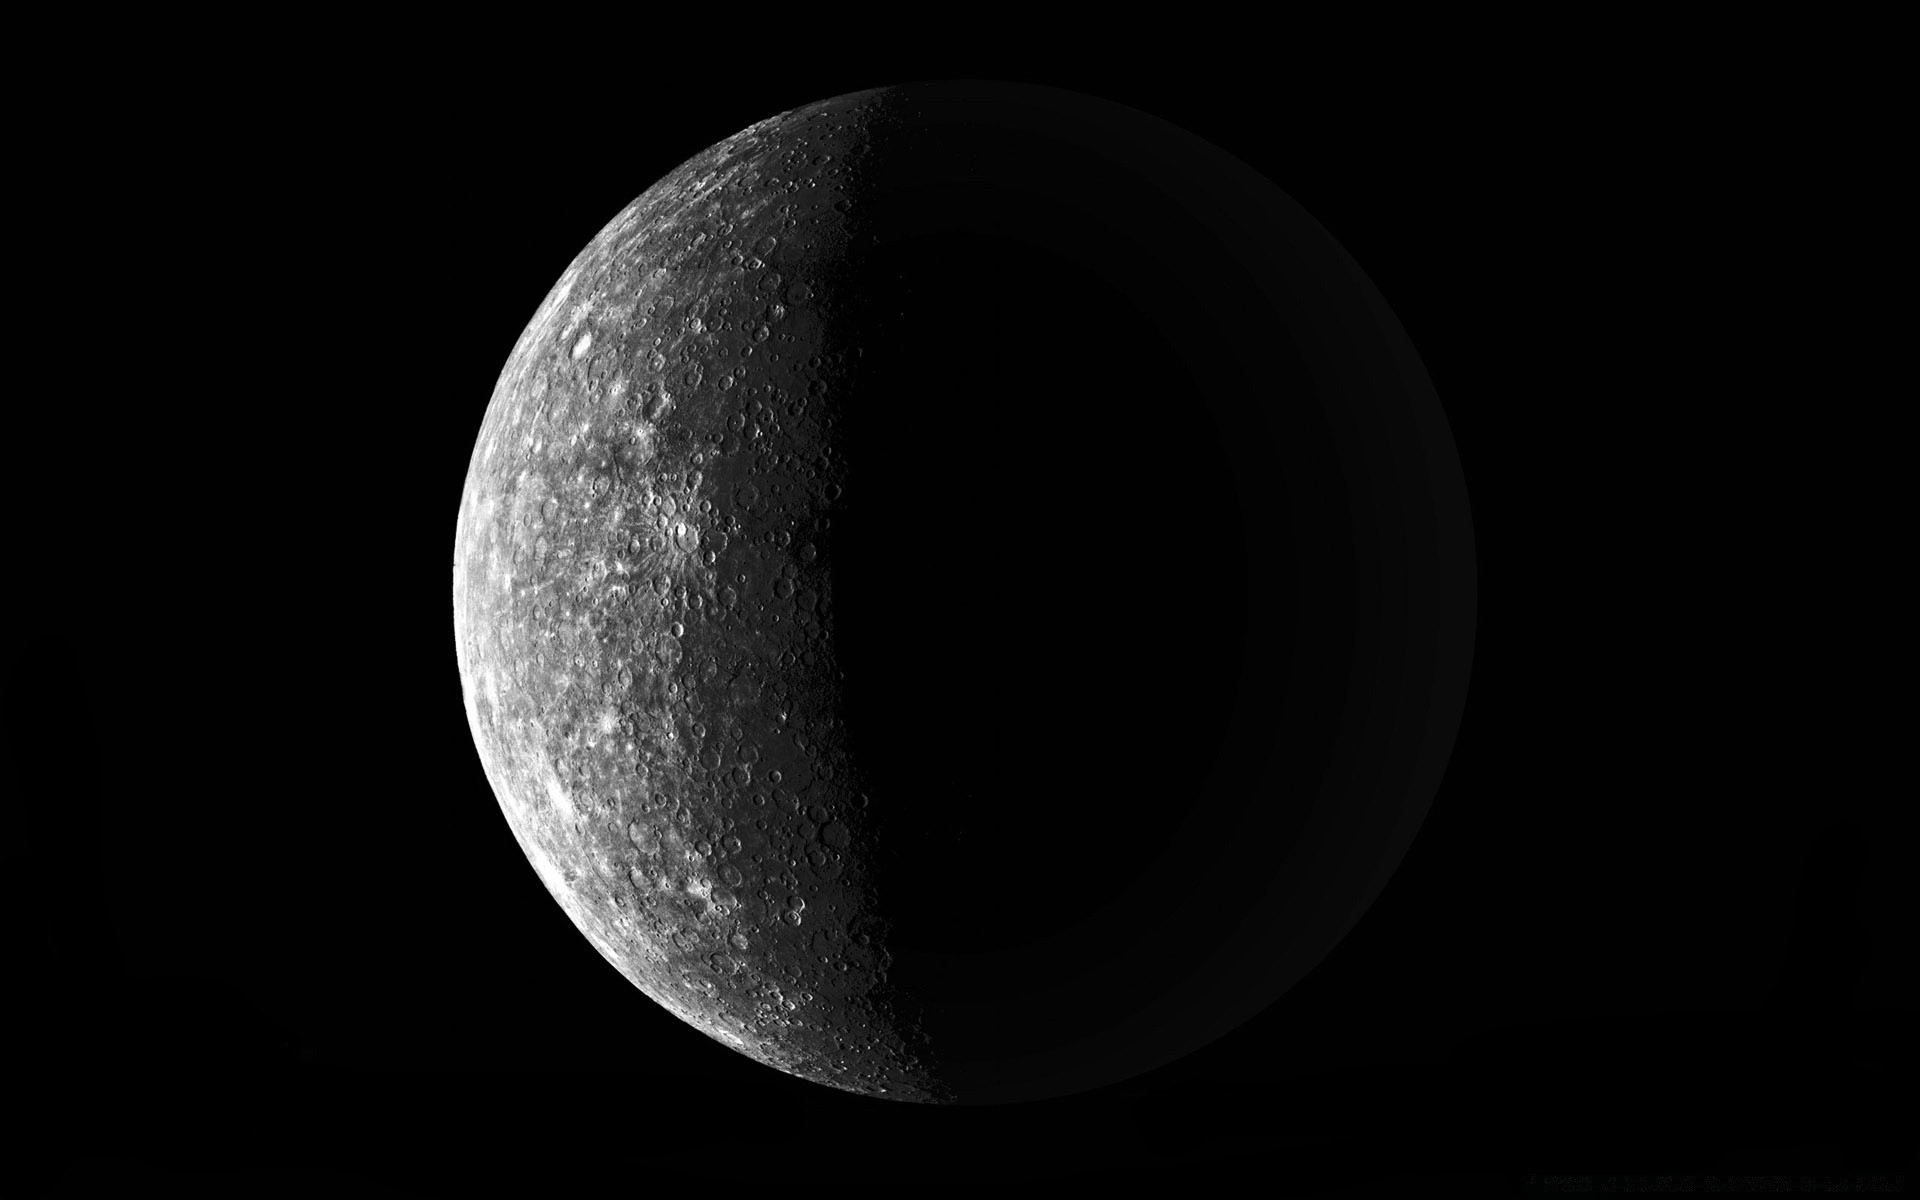 black moon astronomy eclipse planet luna sphere crater satellite lunar ball-shaped telescope orbit dark round astrology solar jupiter sky galaxy